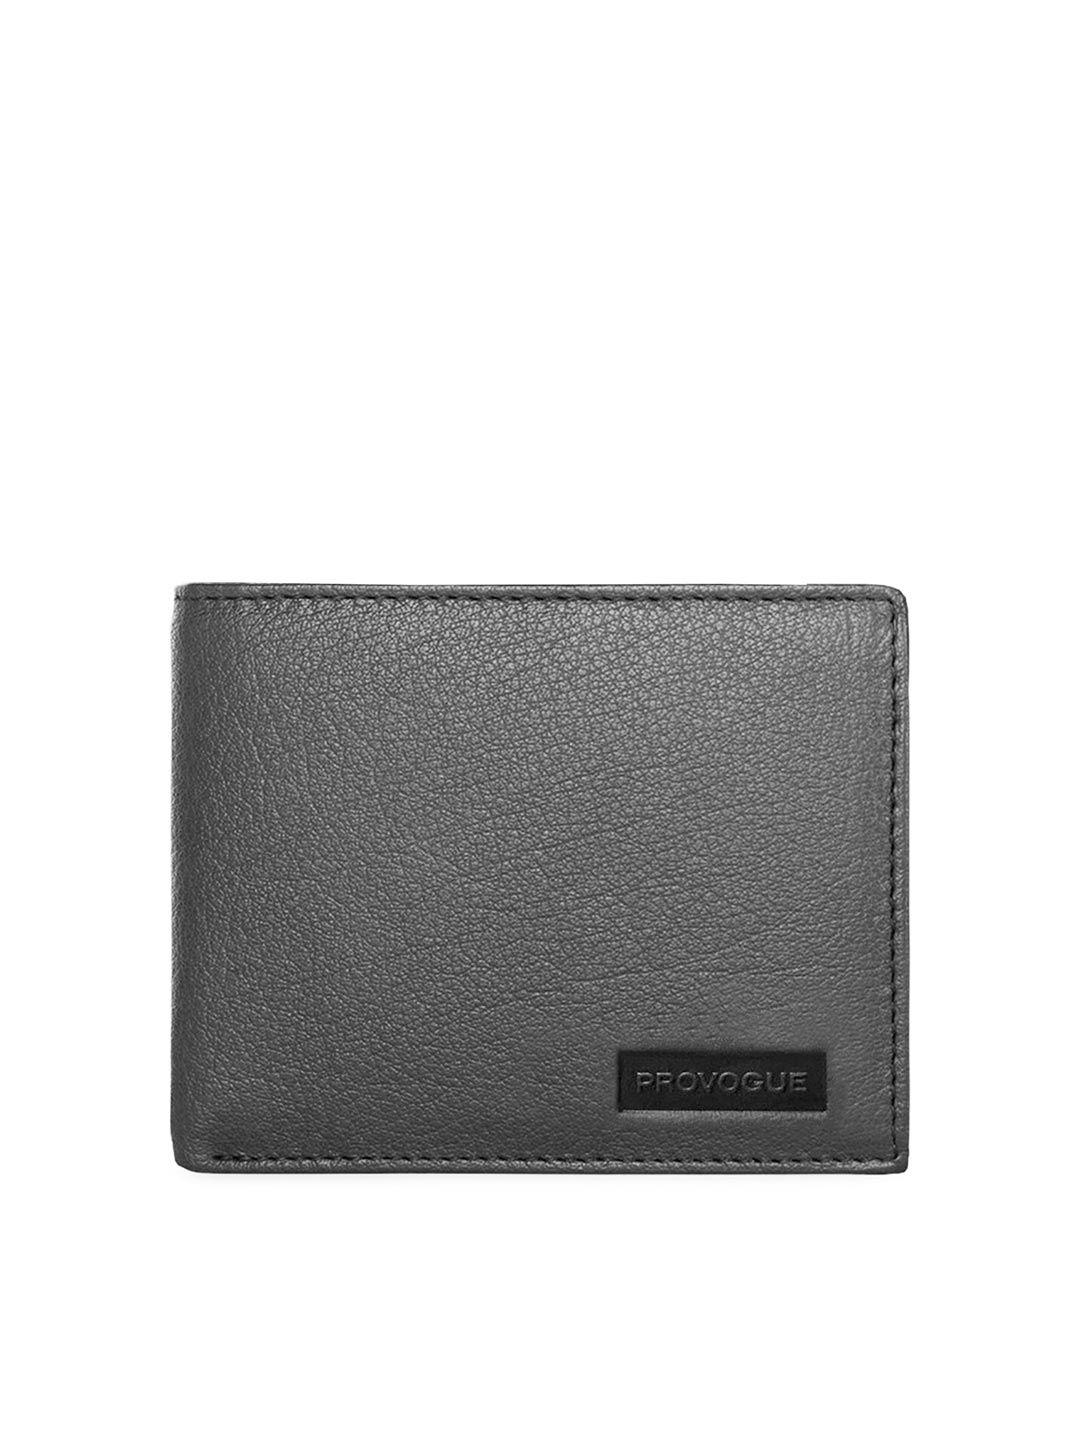 provogue men black leather two fold wallet